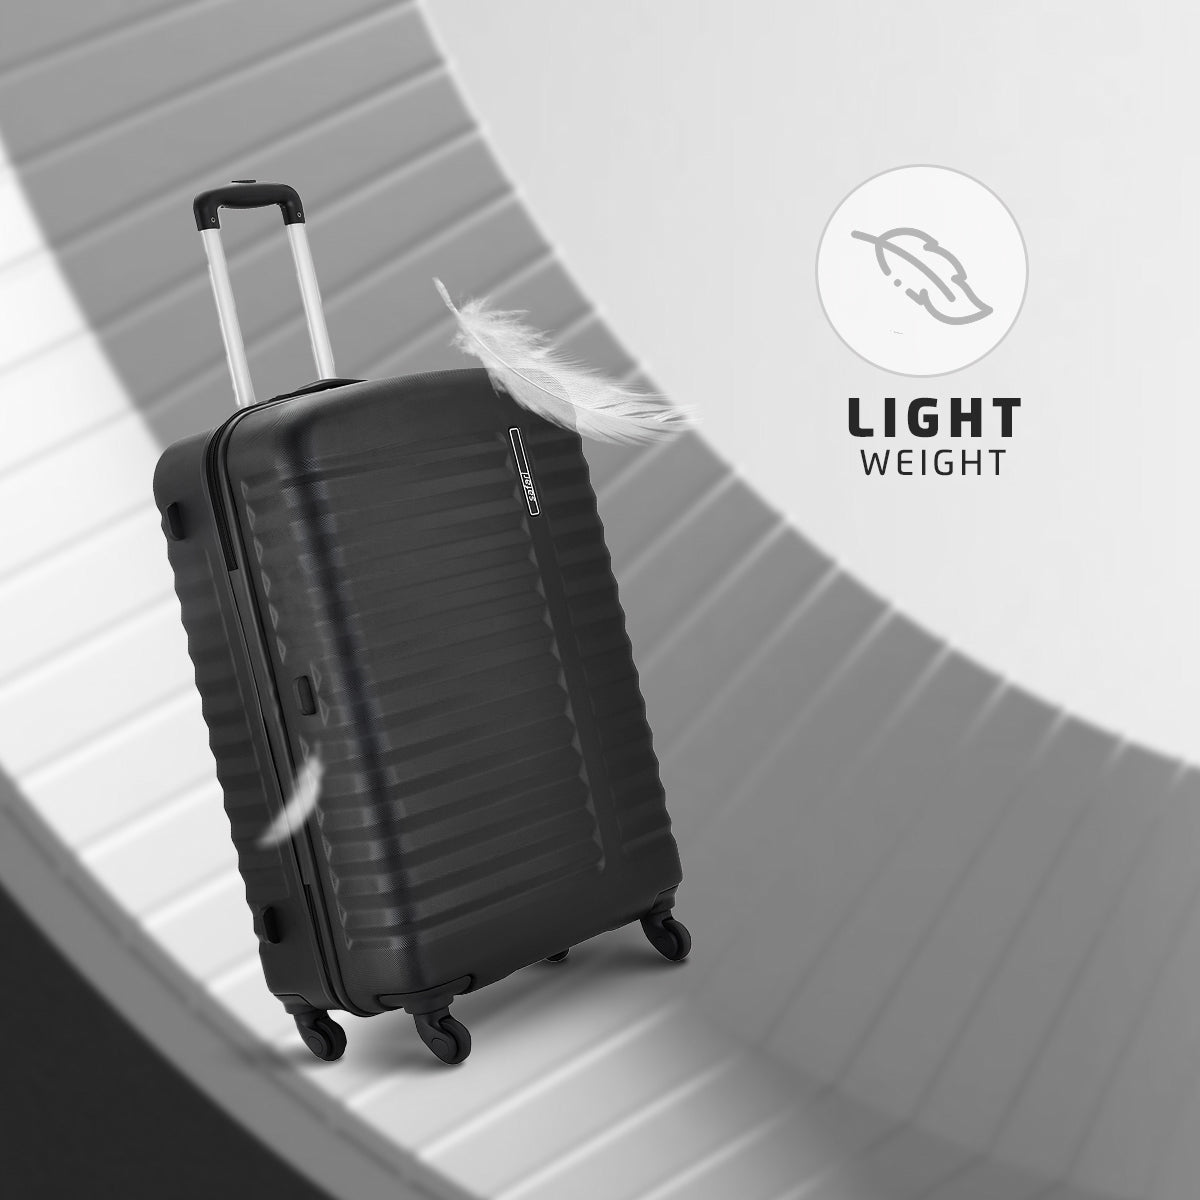 Aerodyne Lightweight Hard Luggage With TSA Lock and Airline Compliant Sizing Combo (Small and Medium) - Black